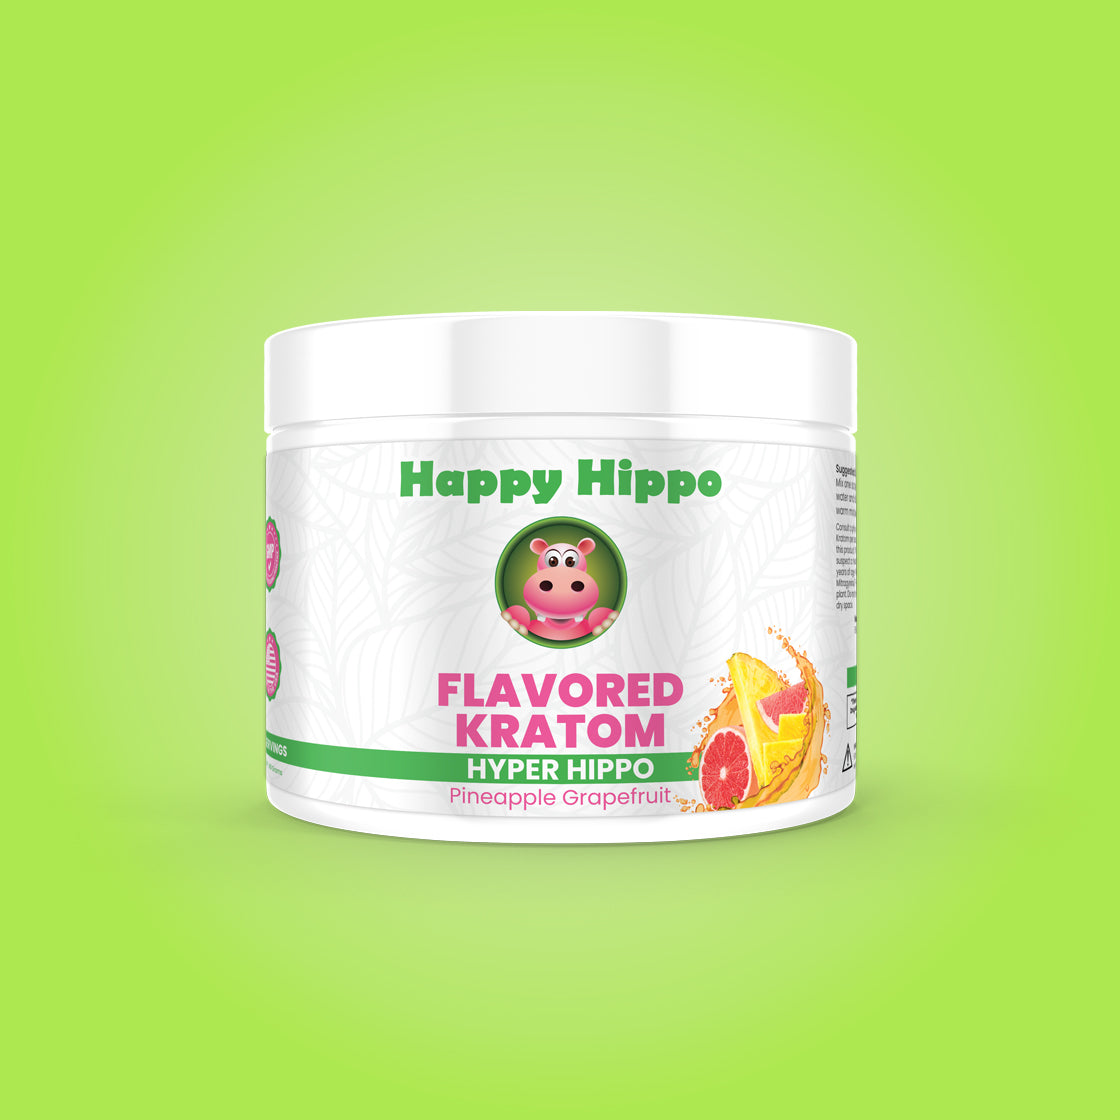 Featured image depicting a 90-gram plastic canister of Happy Hippo branded (Pineapple Grapefruit) Flavored Kratom Green Maeng Da (Hyper Hippo) Kratom Powder